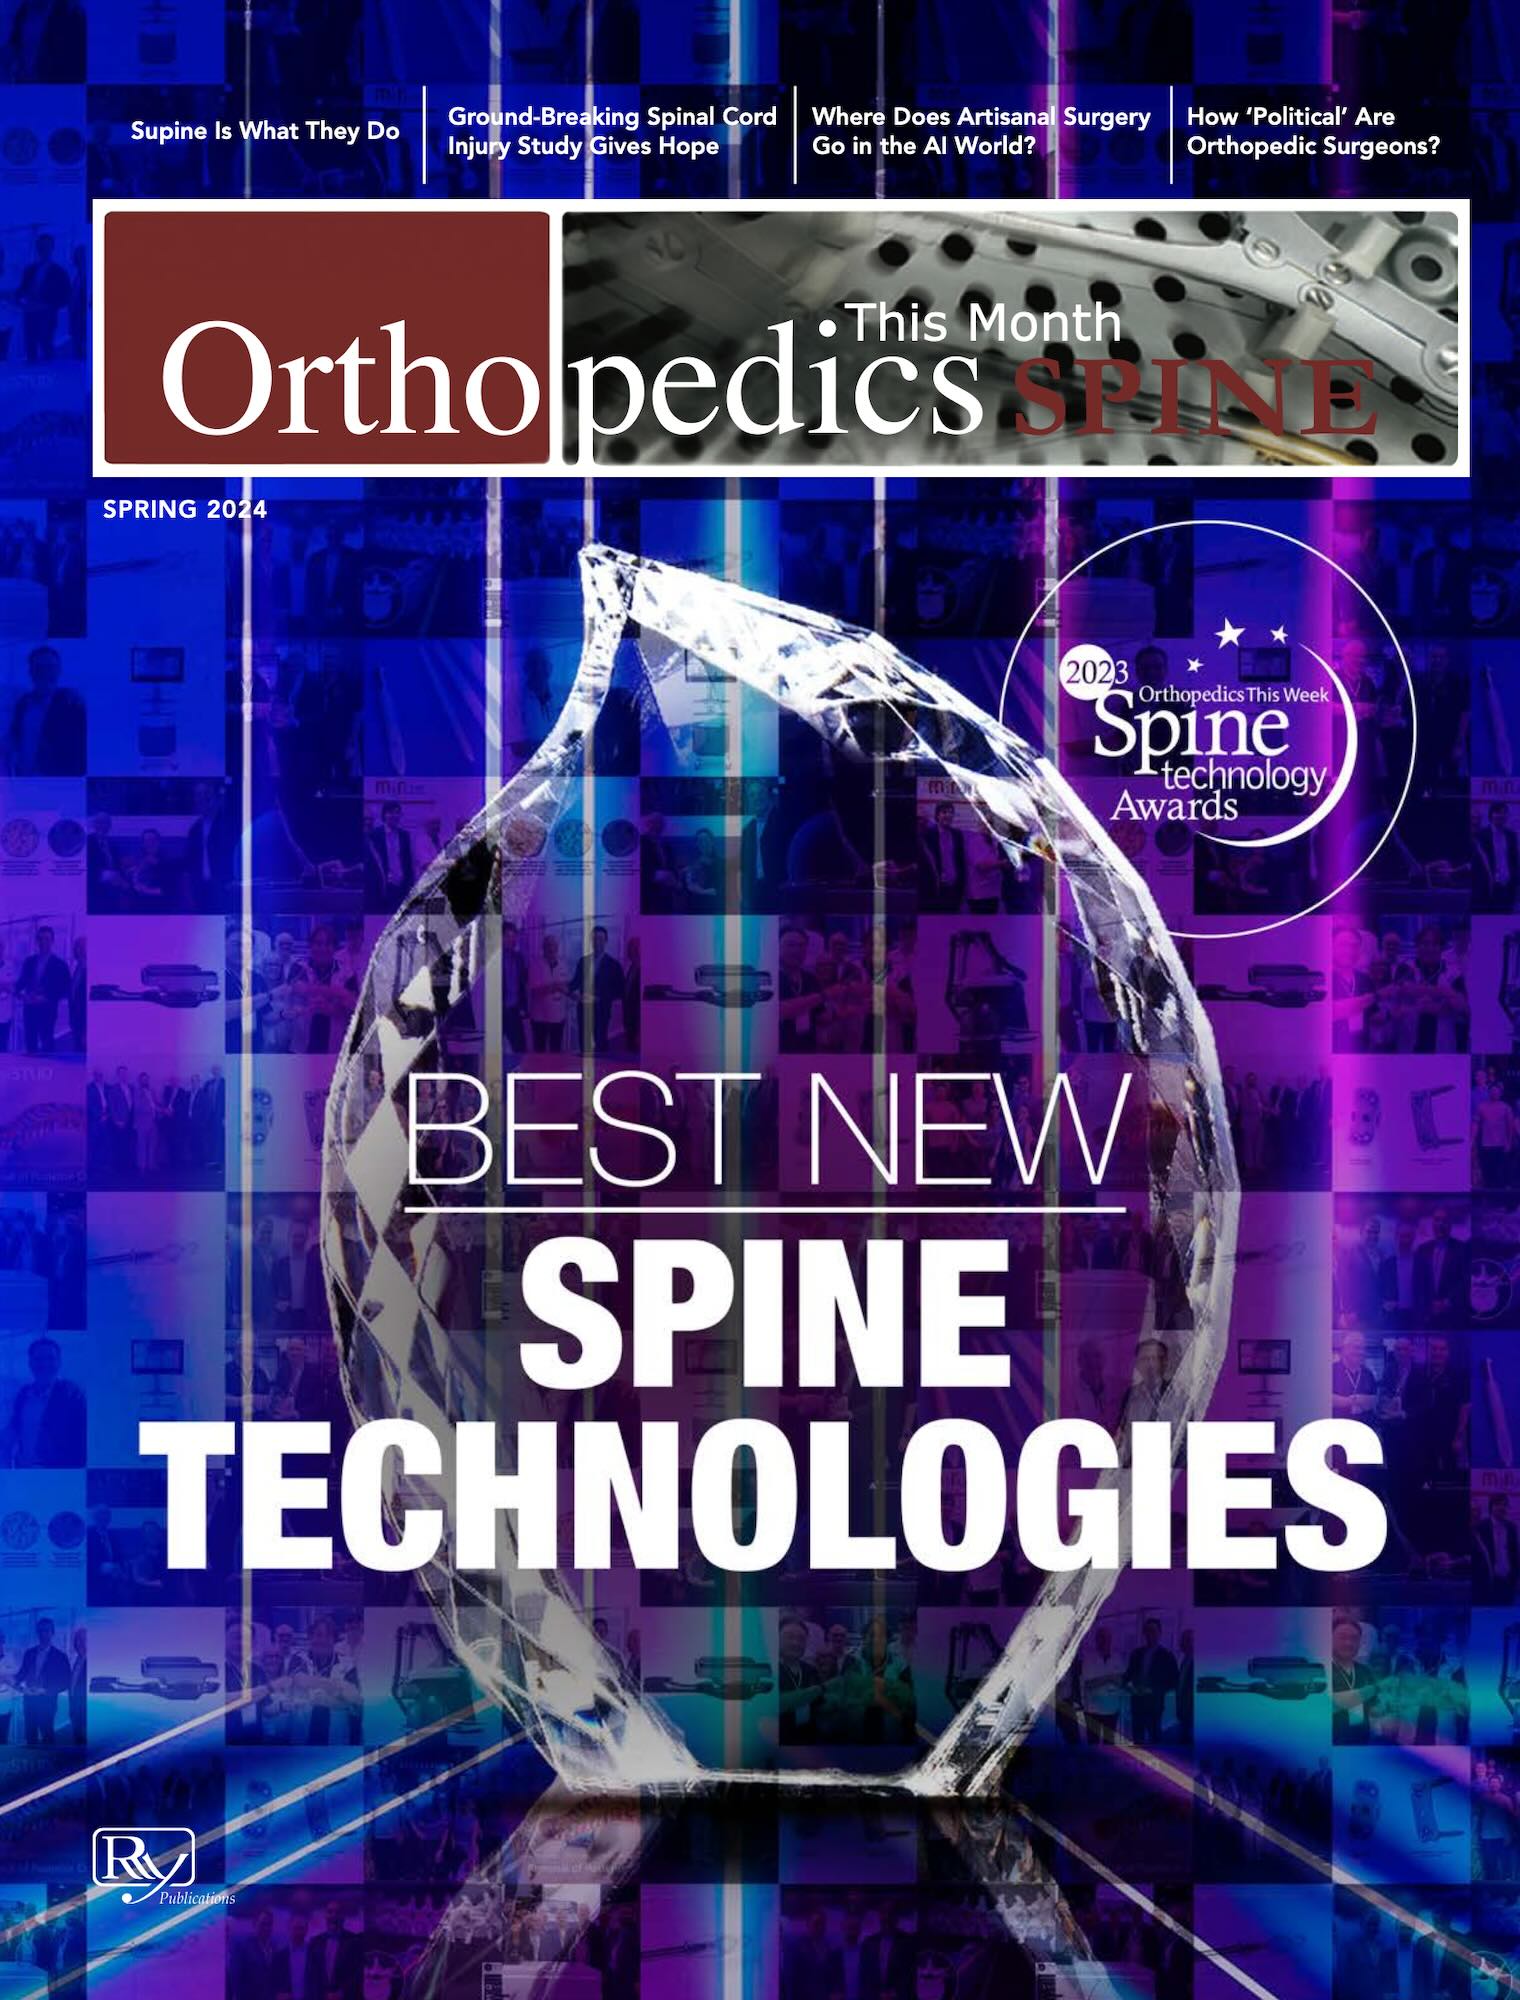 HAPPE Spine best new spine technology award in Orthopedics This Week Magazine